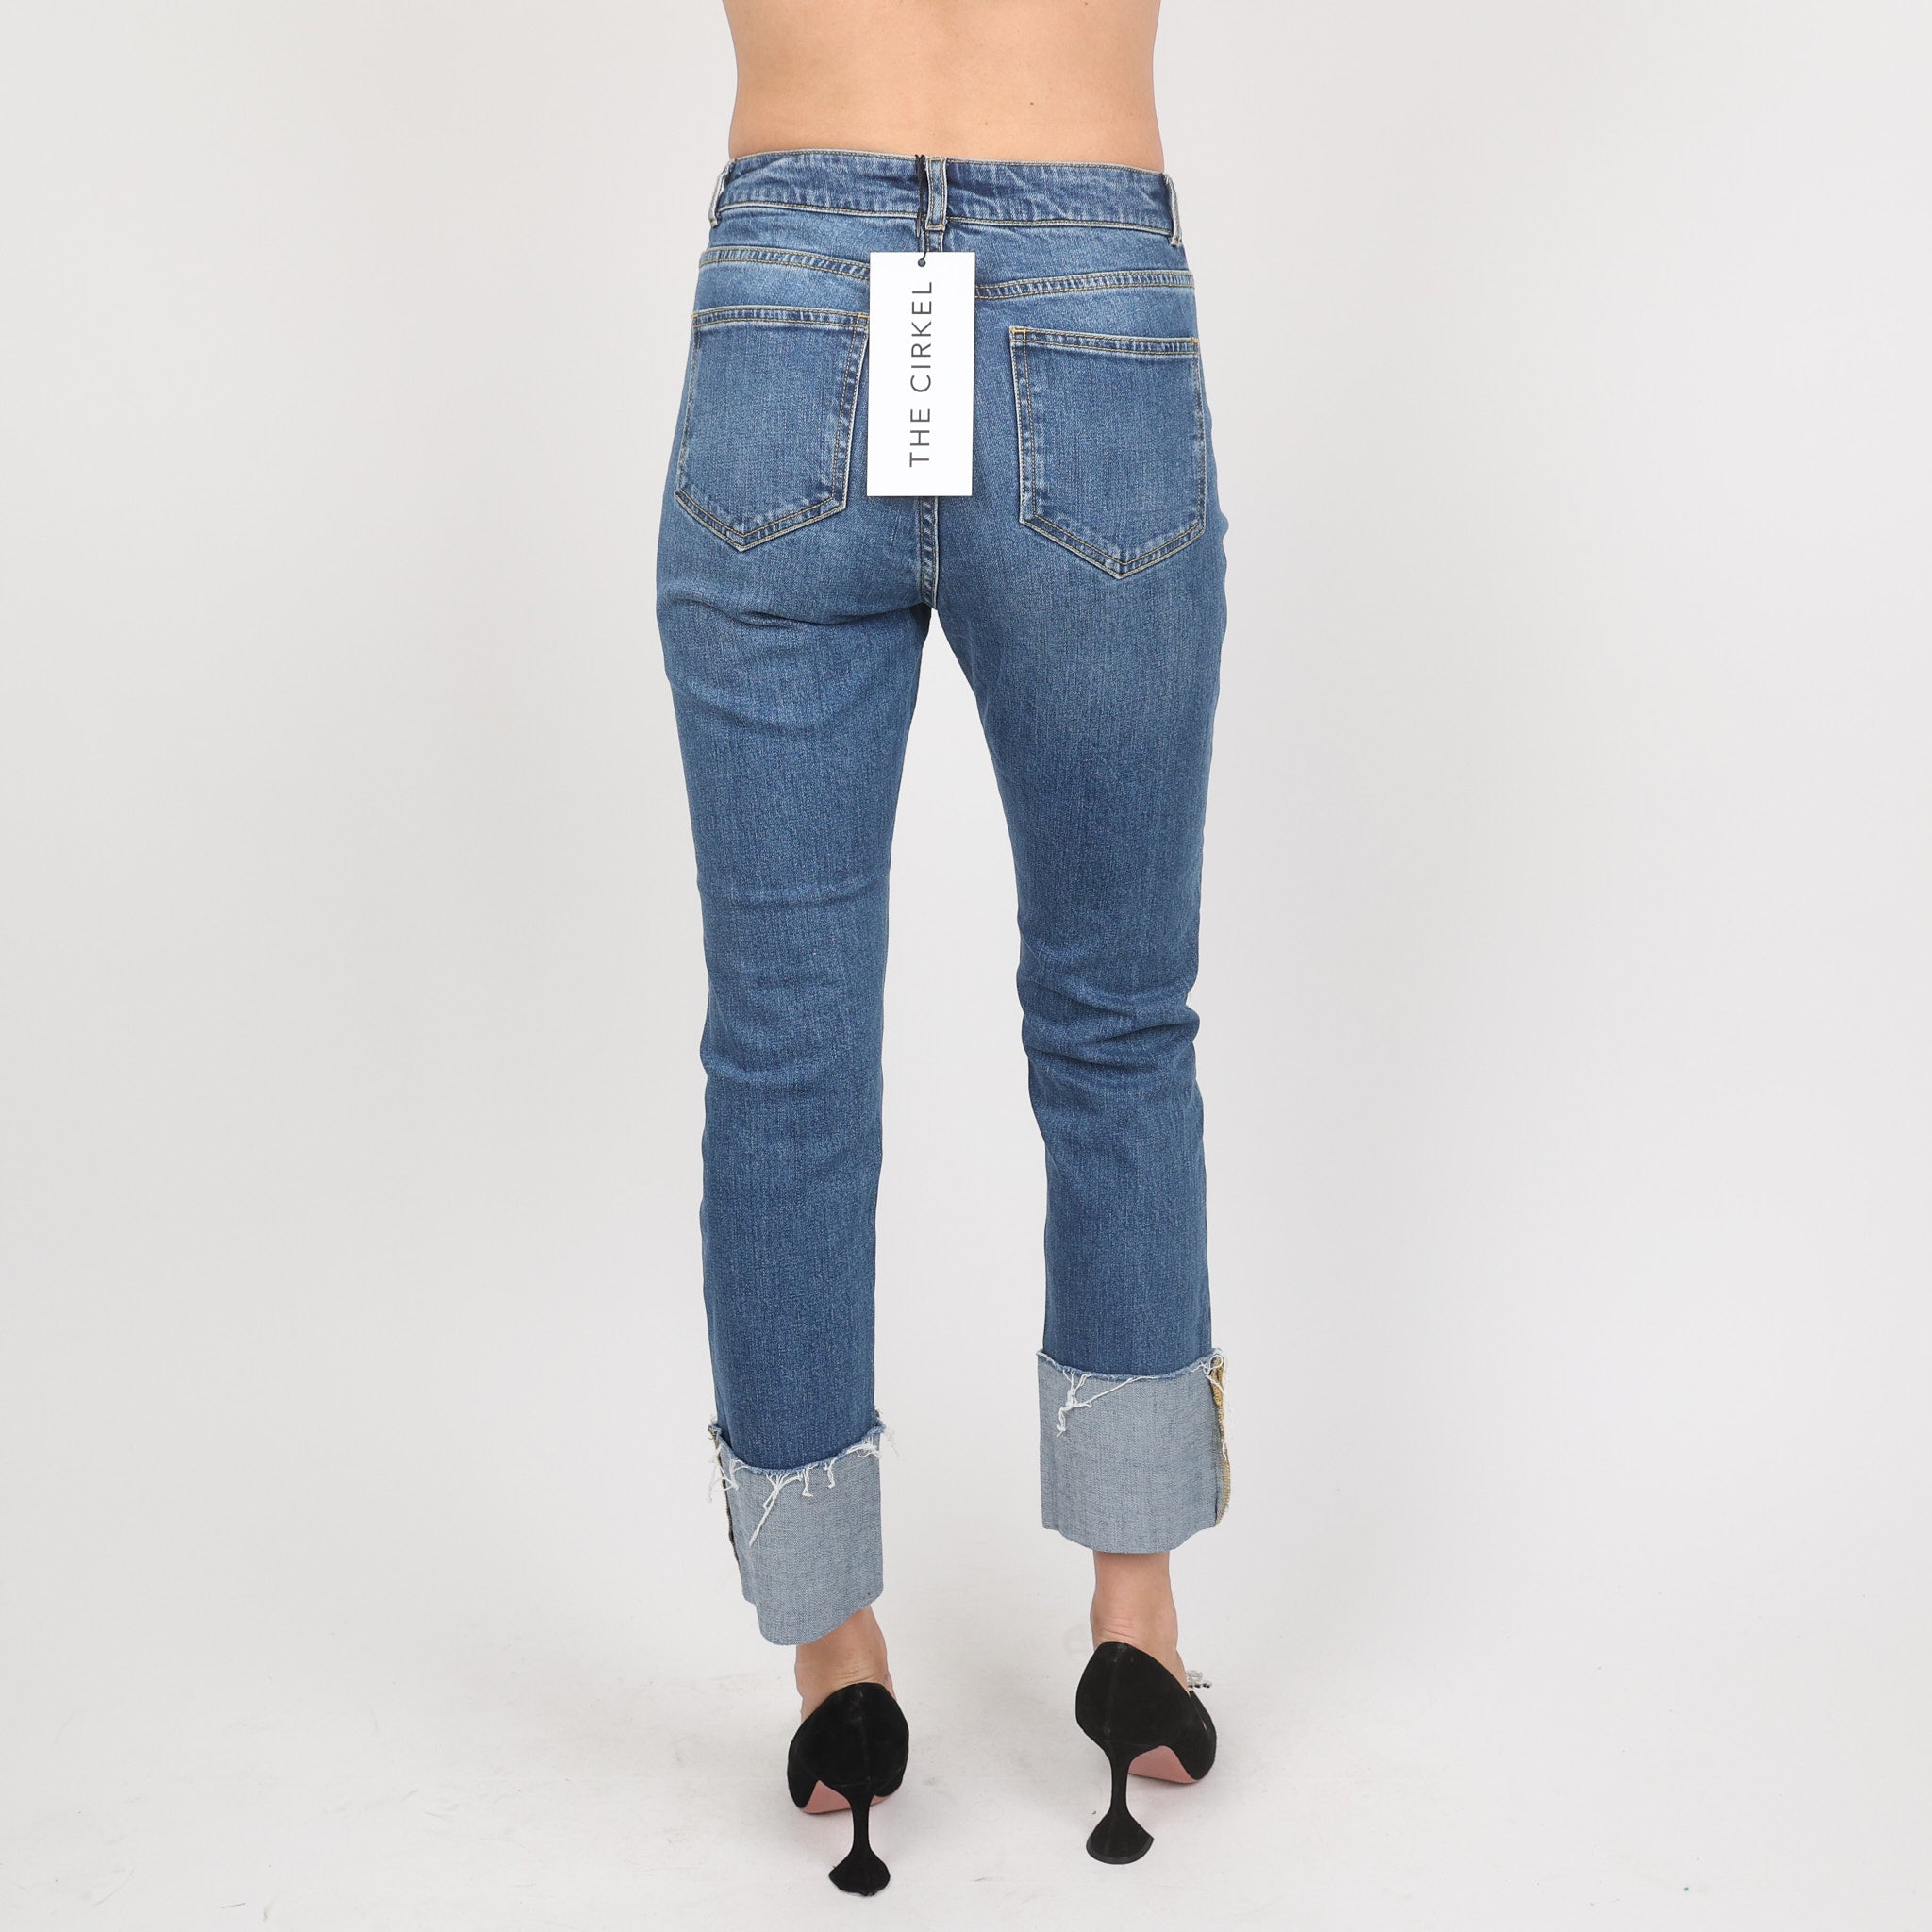 Jeans, UK Size 8